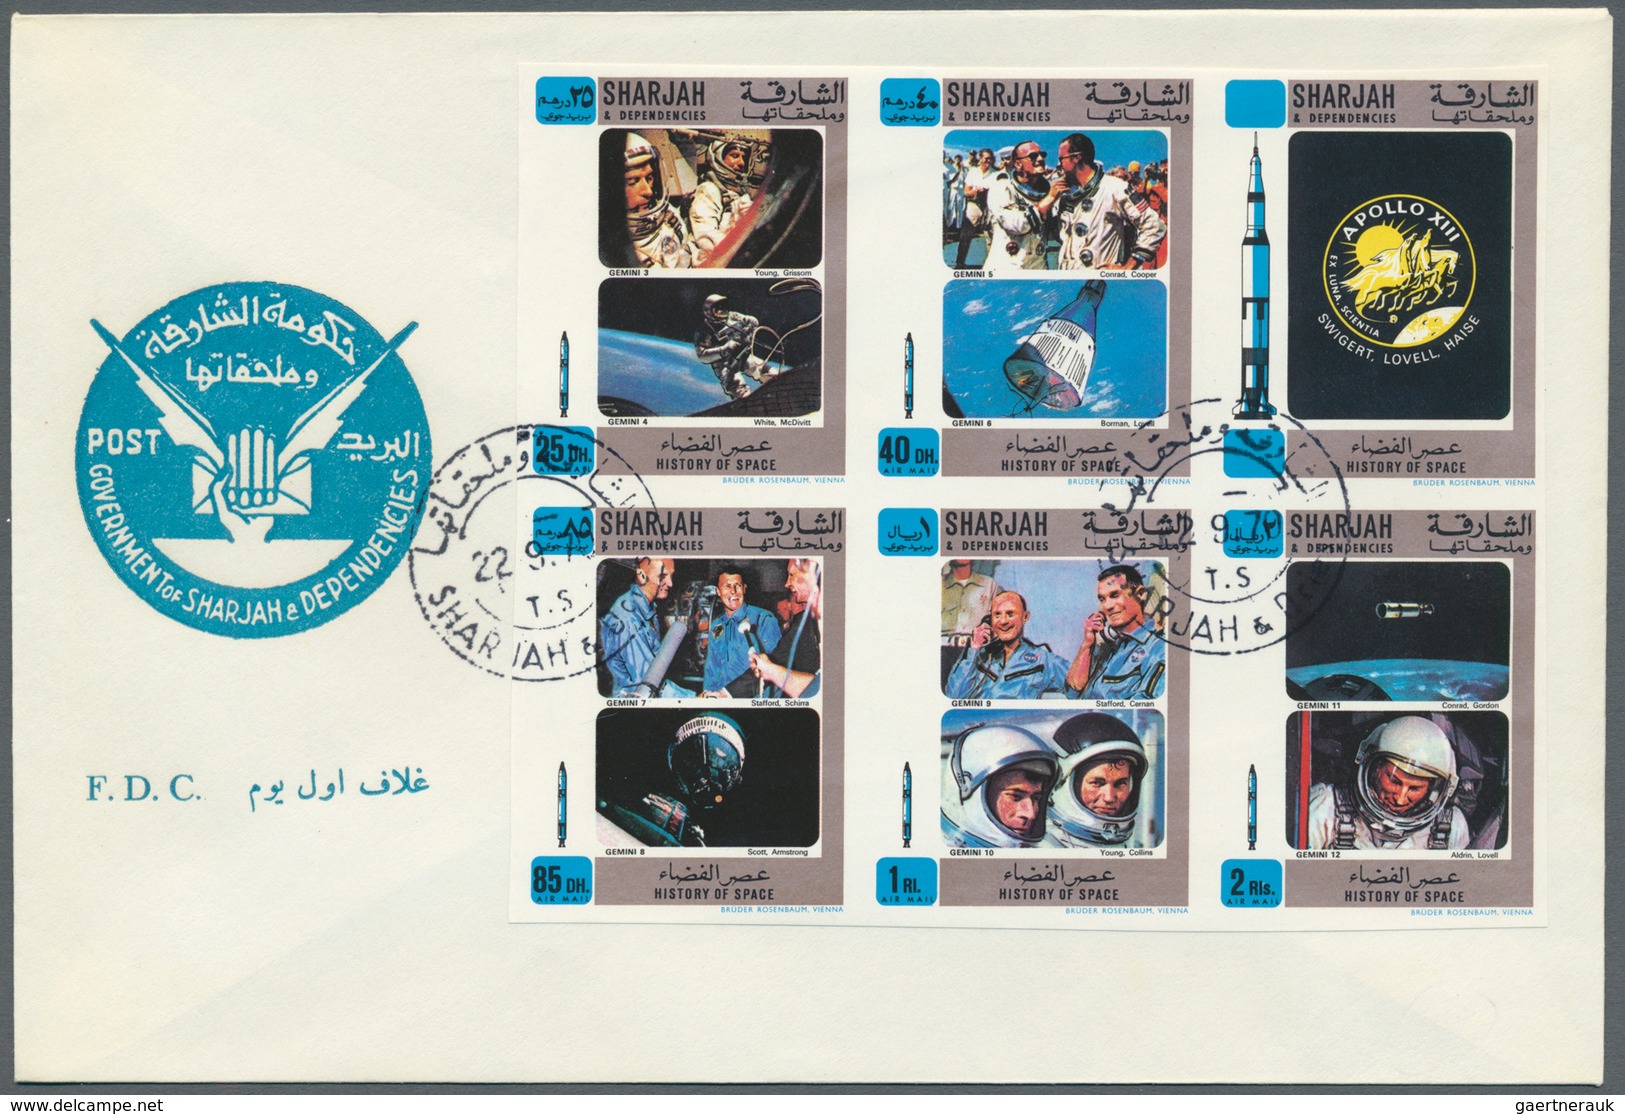 25468 Thematik: Raumfahrt / astronautics: 1969/1971, Sharjah, assortment of 27 (mainly cacheted) envelopes